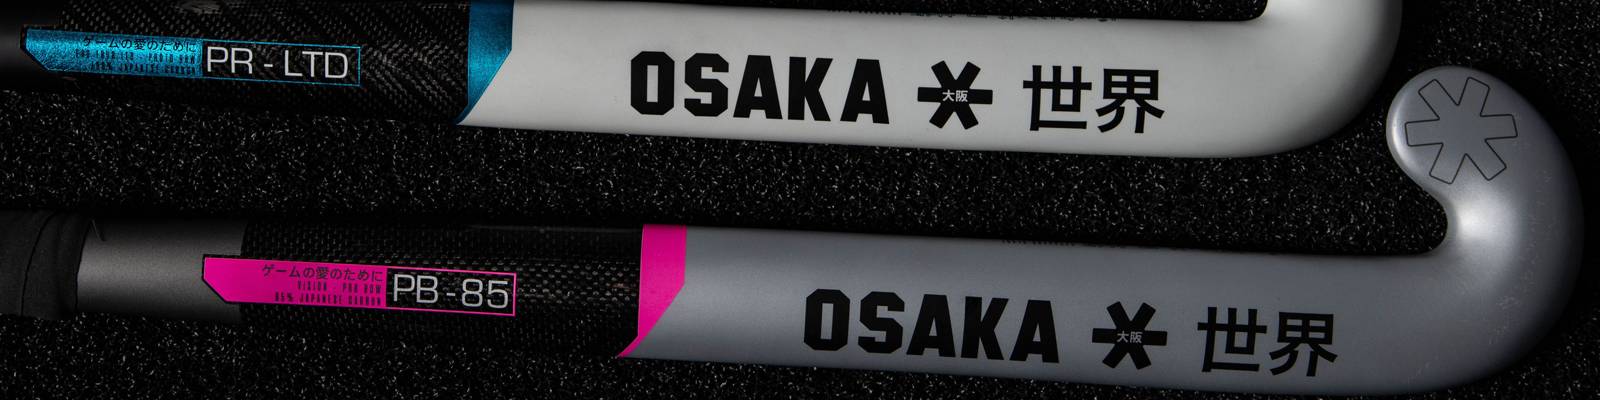 Producten getagd met Osaka